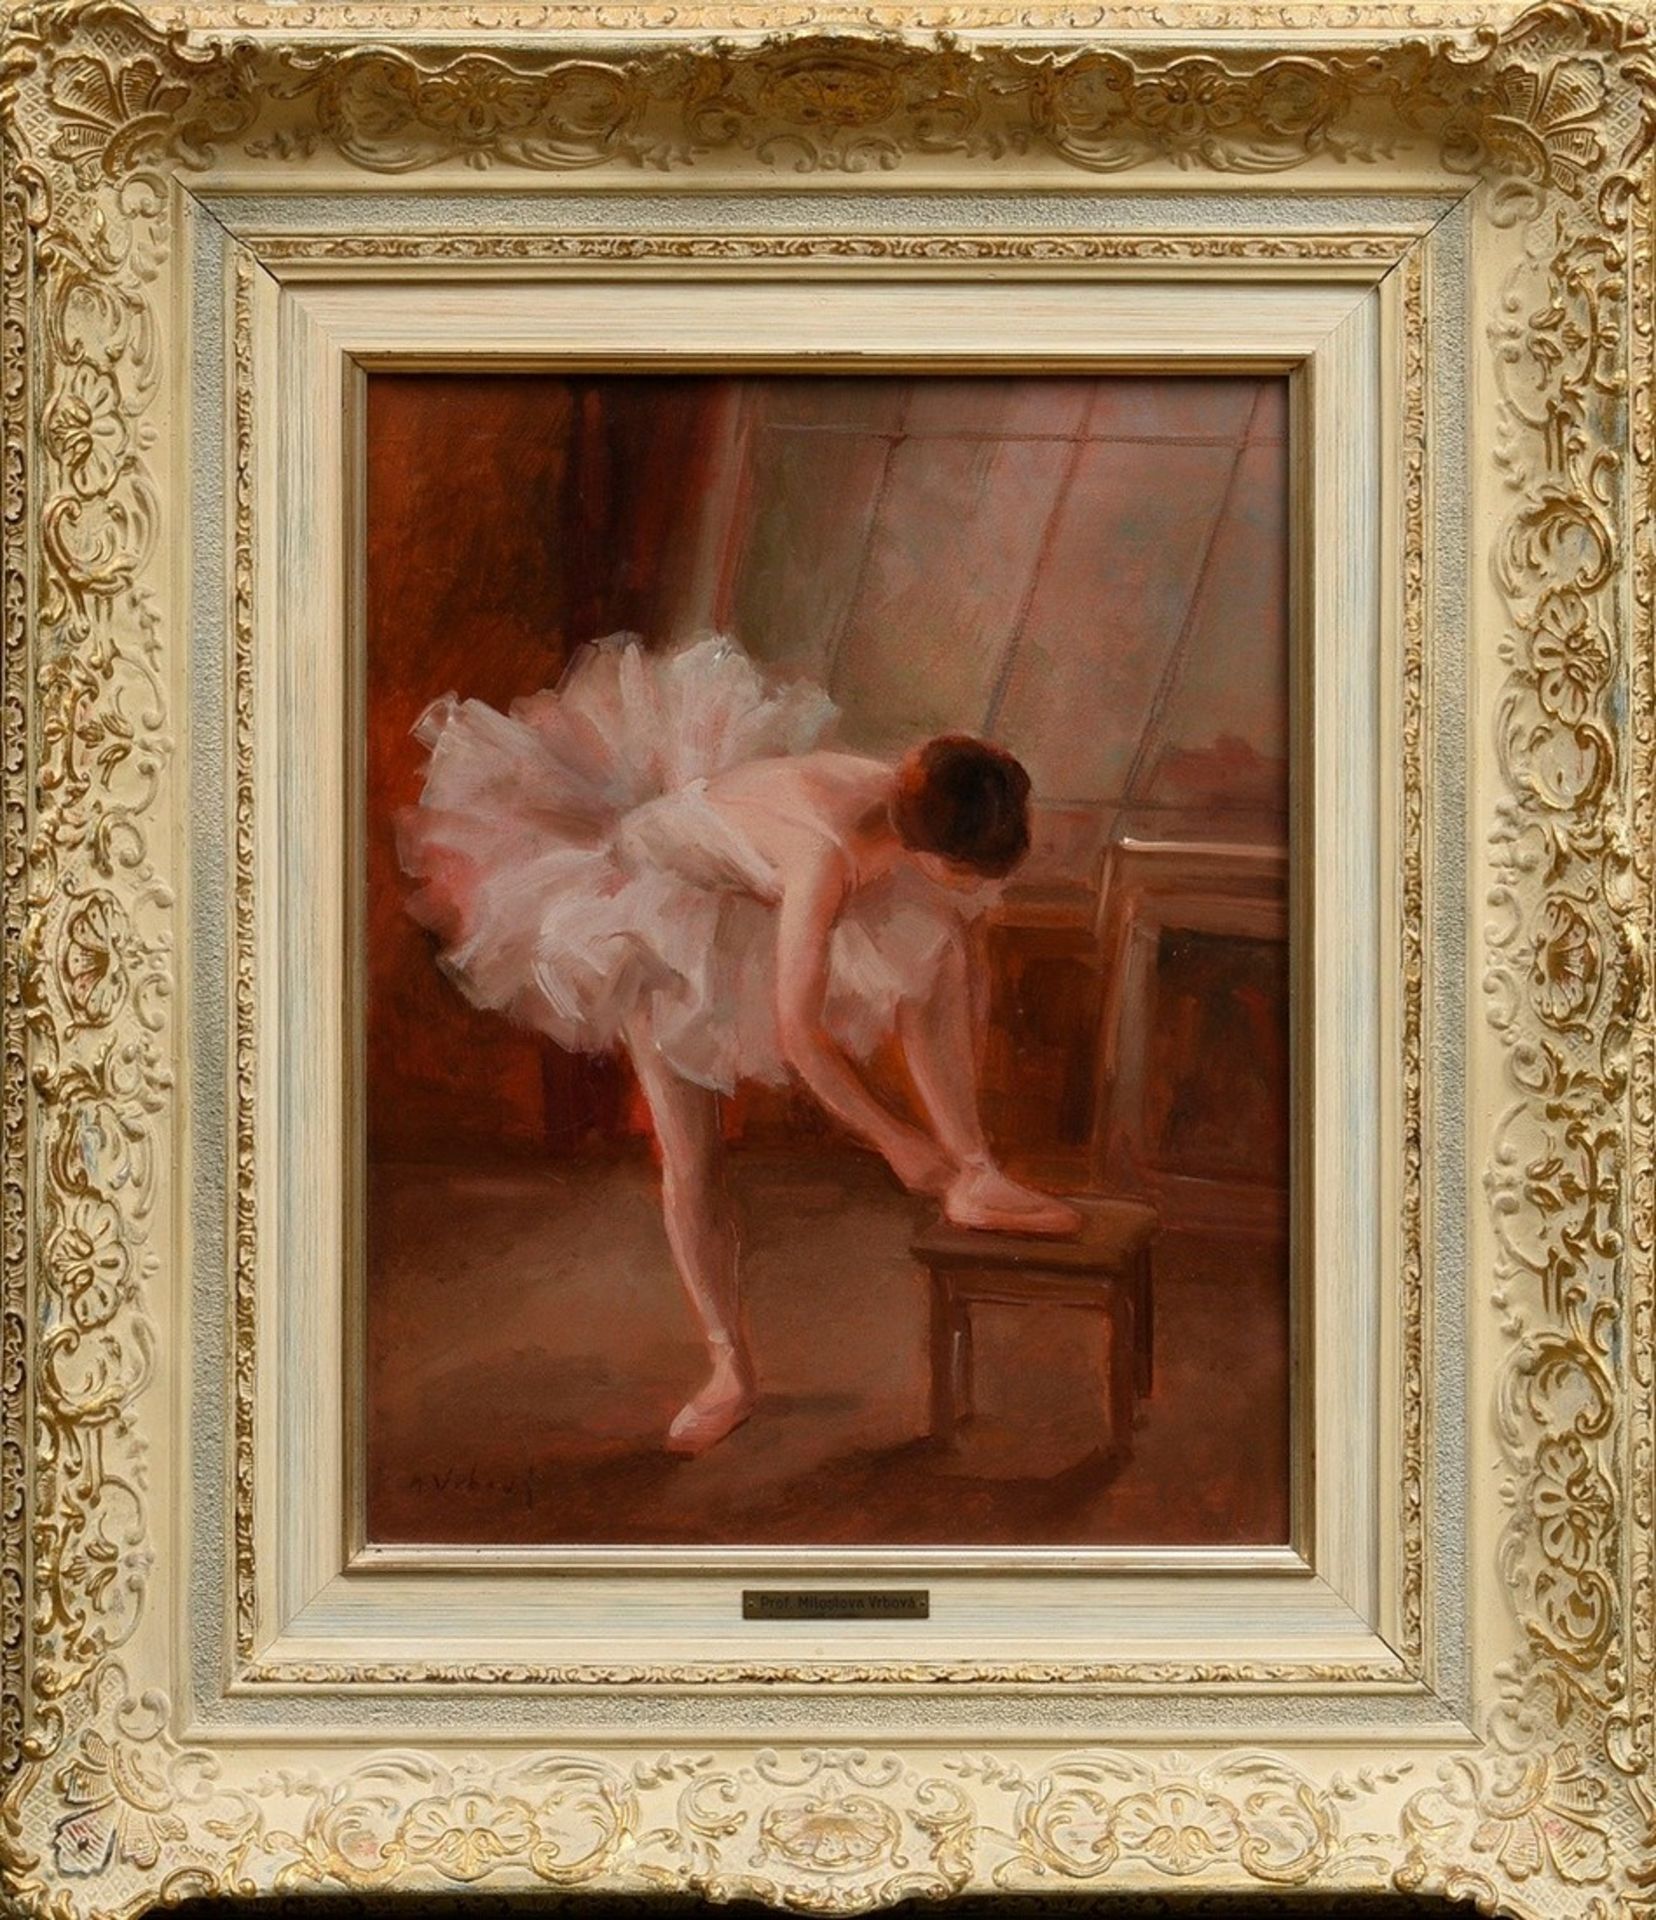 Urbova-Stefkova, Miloslava (1909-1991) "Ballet Dancer", oil/hardboard, b.l. signed, verso inscr., p - Image 2 of 7